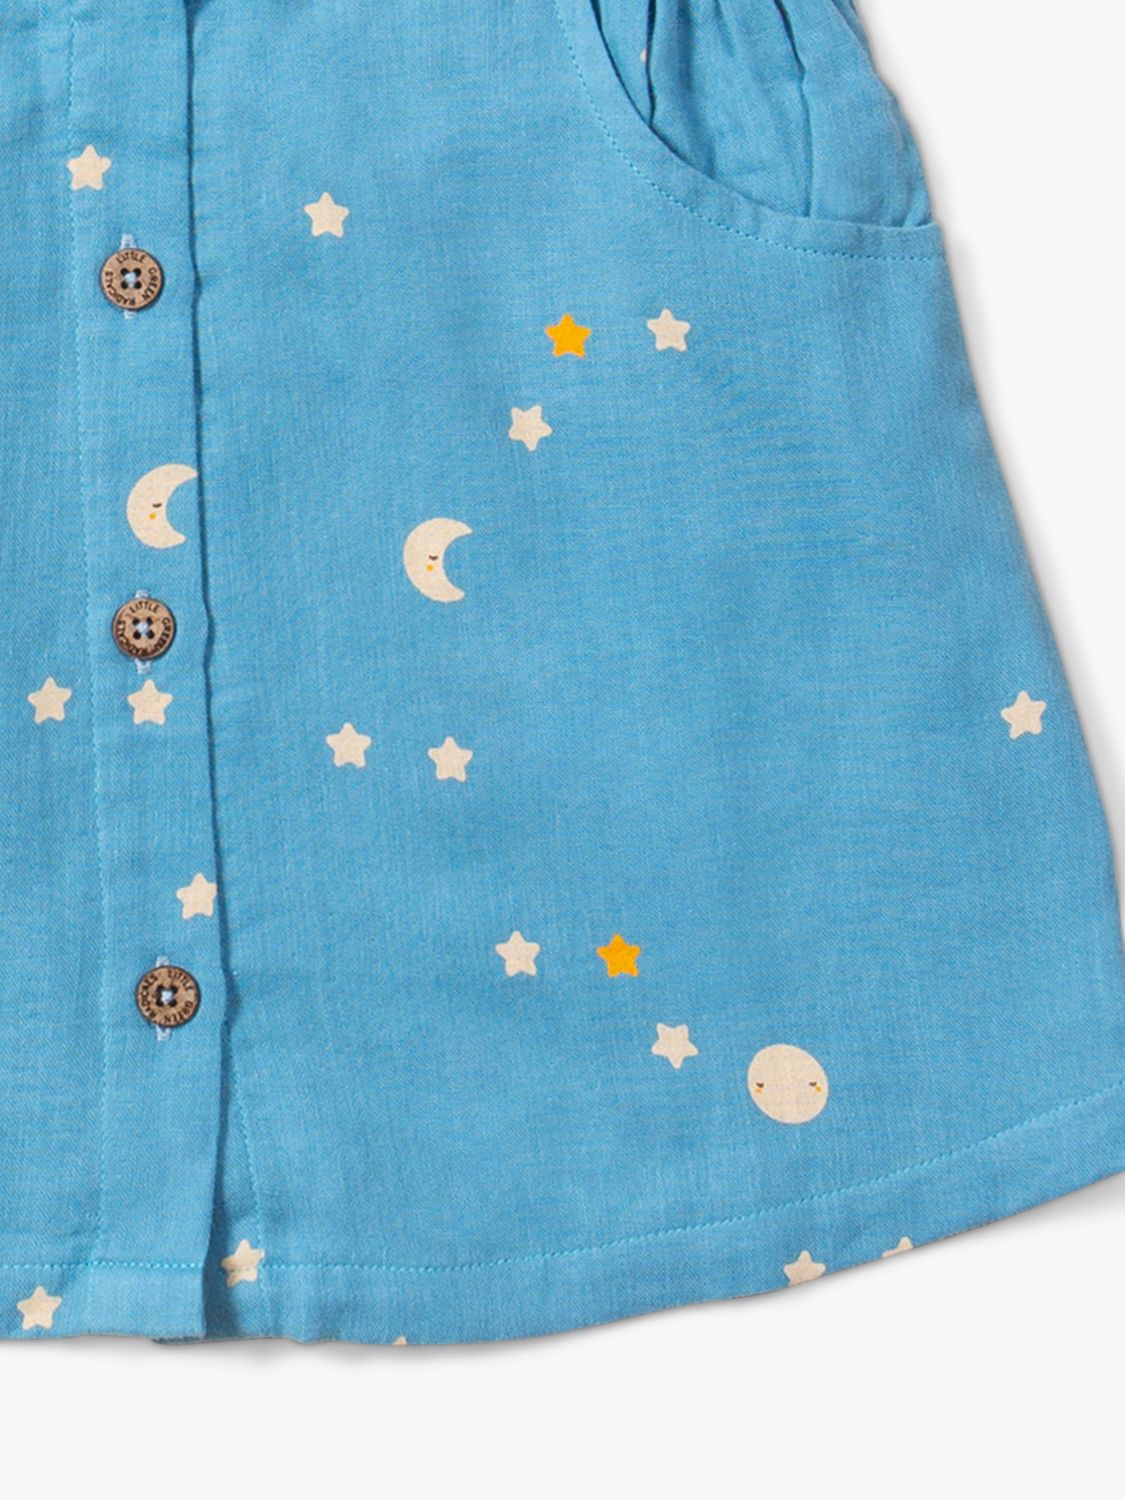 Buy Little Green Radicals Baby Organic Cotton Dawn Button Through Dress, Multi Online at johnlewis.com